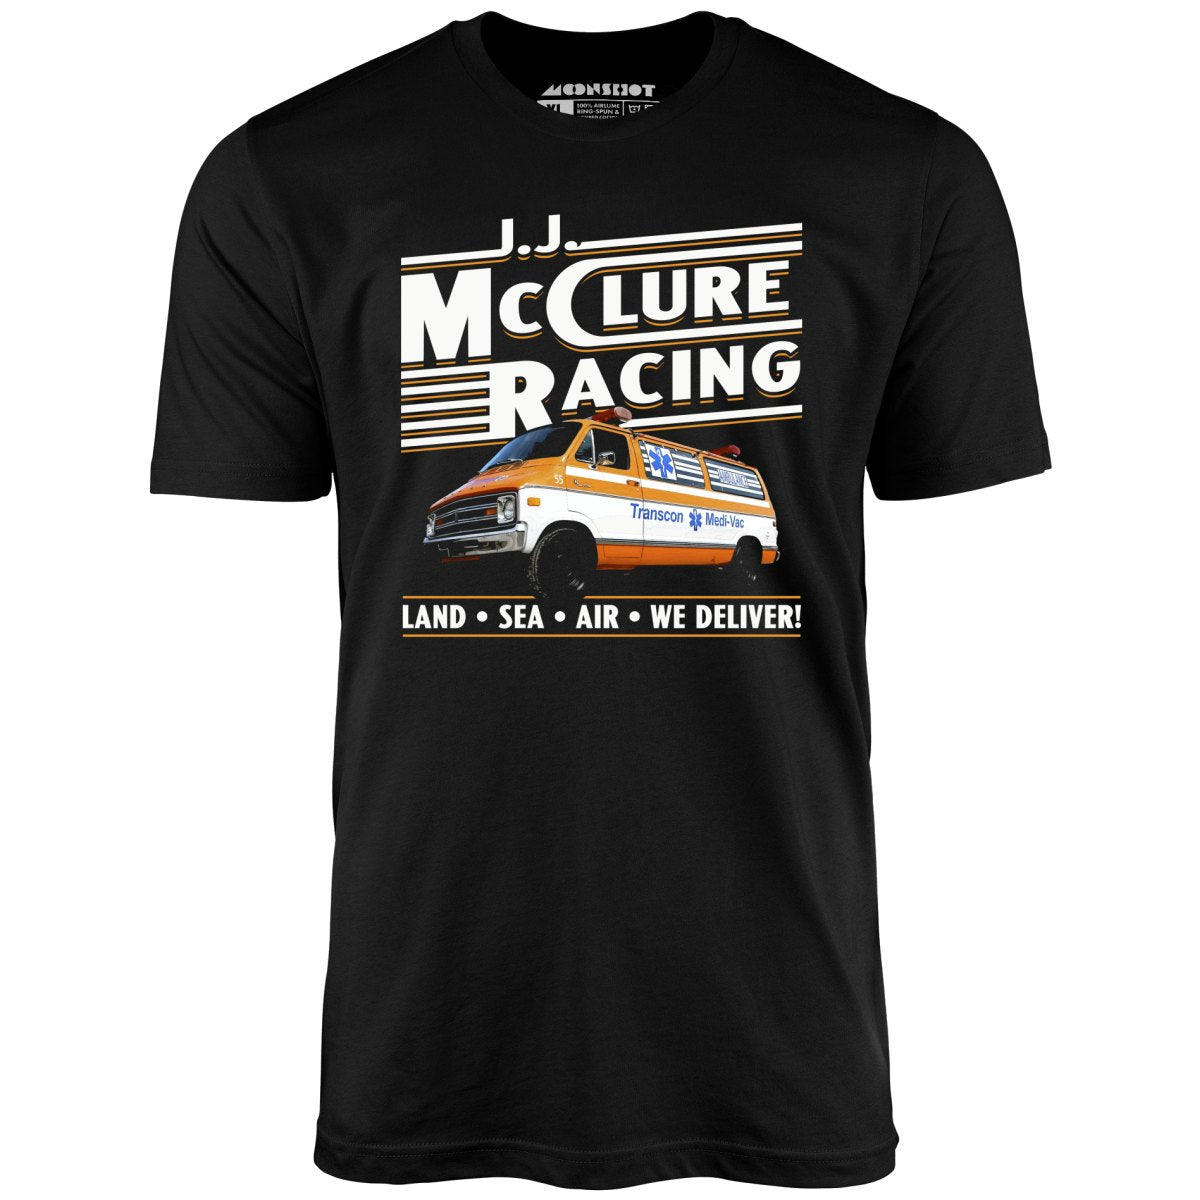 J.J. McClure Racing - Unisex T-Shirt